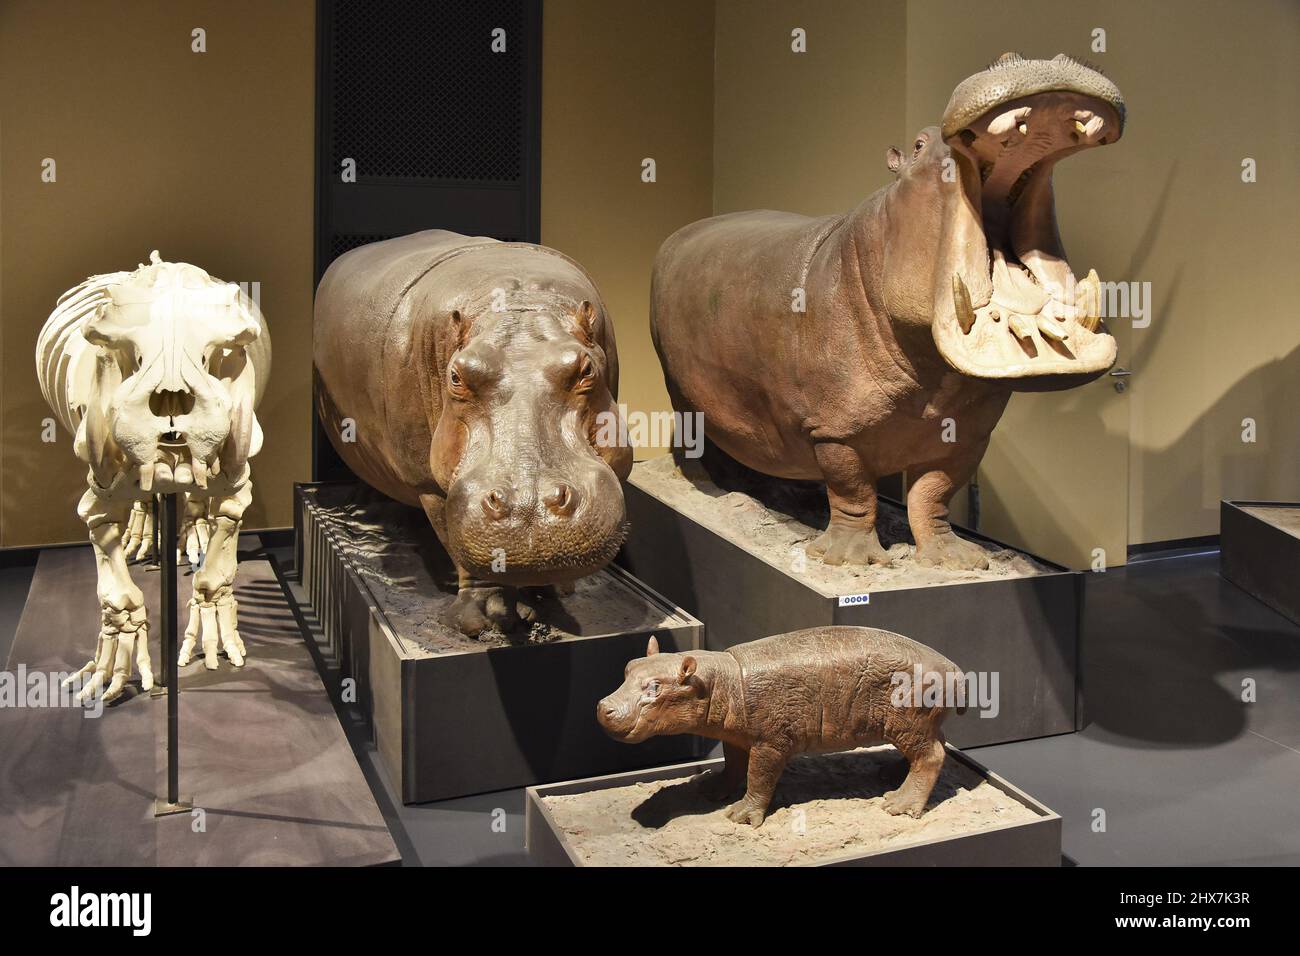 Hippopotamus amphibius animal exhibits displayed at Museum of Natural History (Museum für Naturkunde) in Berlin Germany. Stock Photo